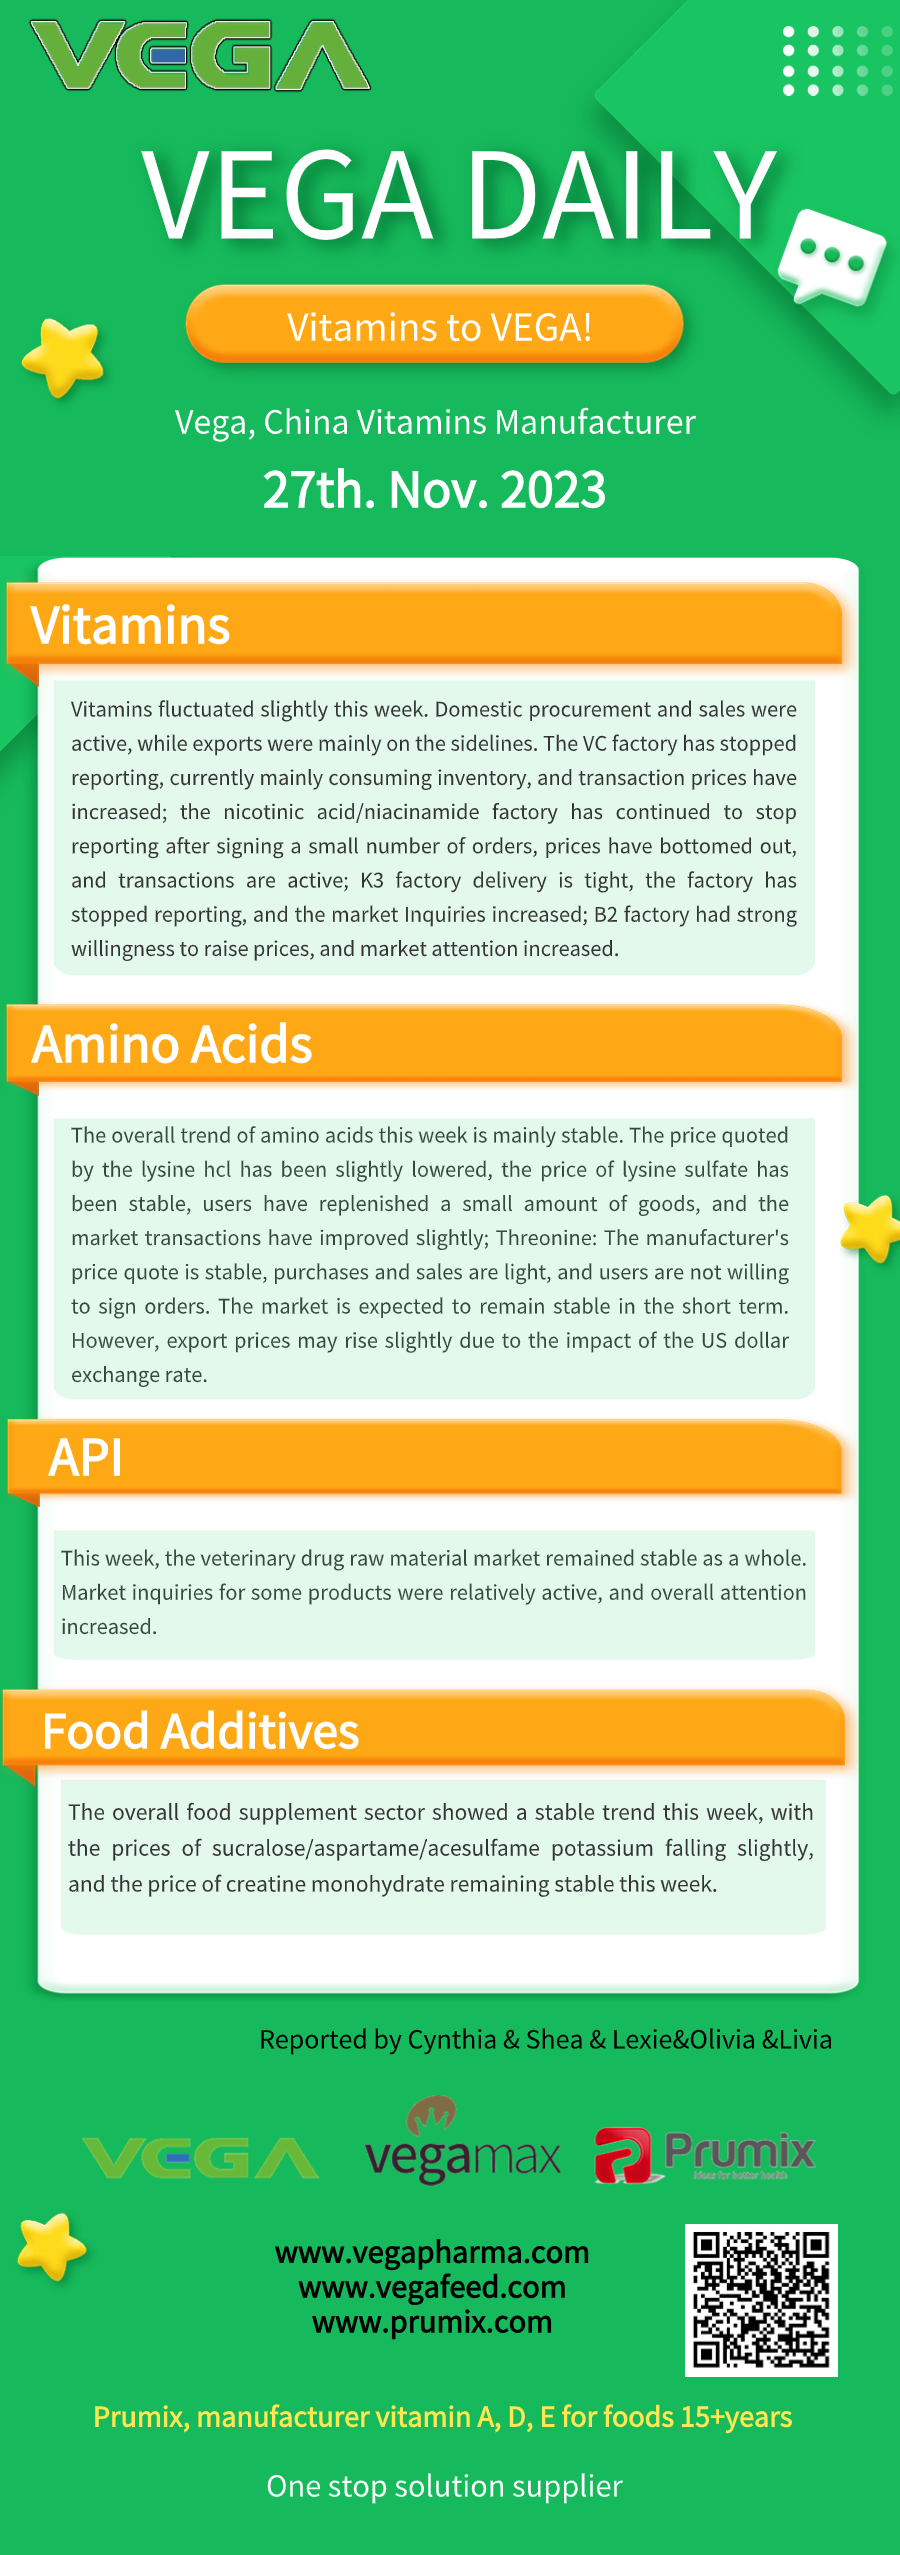 Vega Daily Dated on Nov 27th 2023 Vitamin Amino Acid APl Food Additives.png